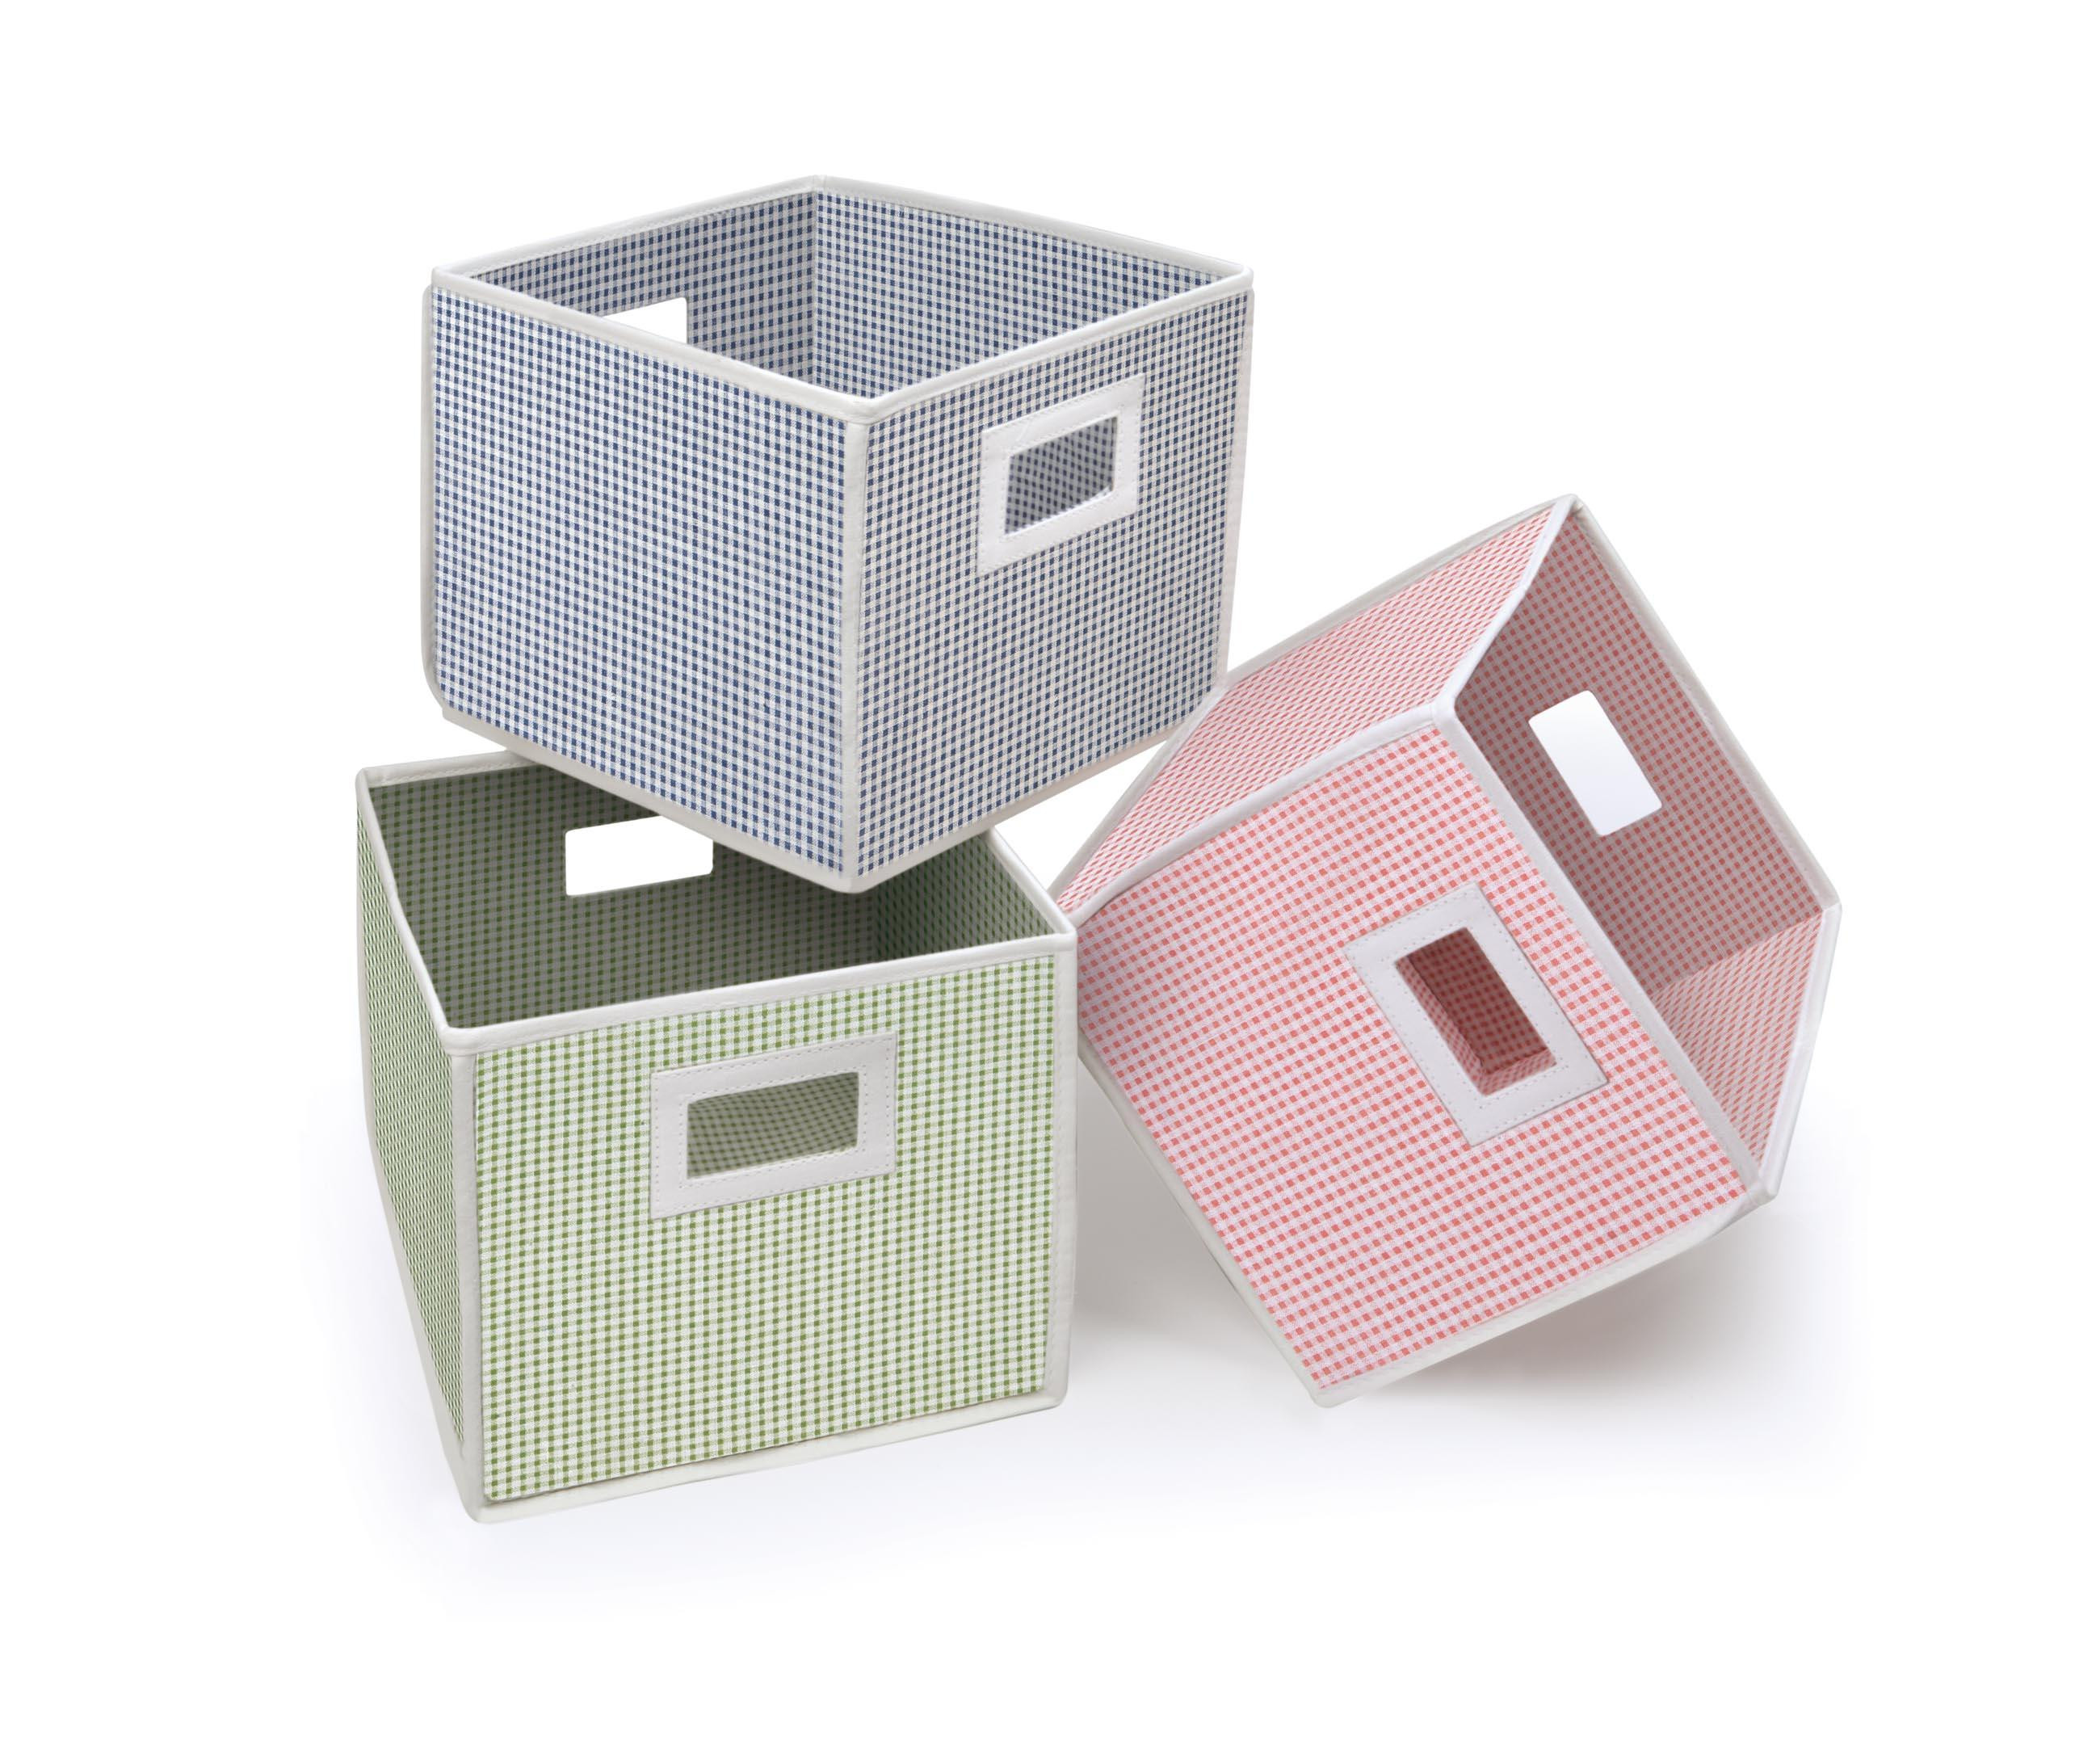 Best ideas about Baby Storage Basket
. Save or Pin Badger Basket Folding Nursery Basket Storage Cube by OJ Now.